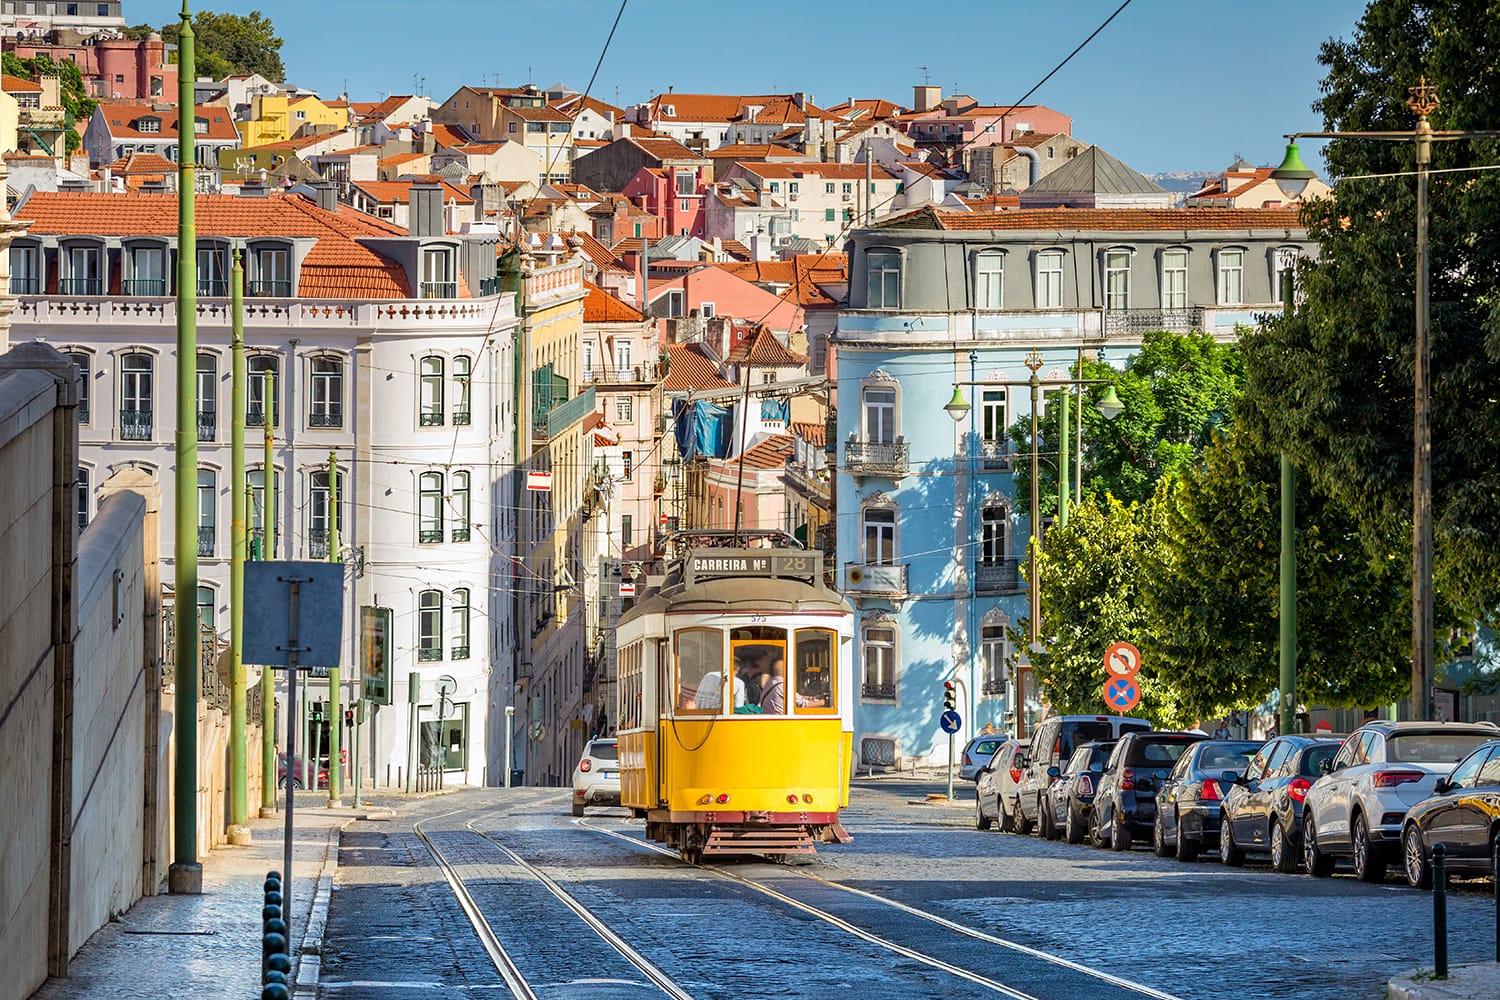 tram on line 28 in Lisbon, Portugal